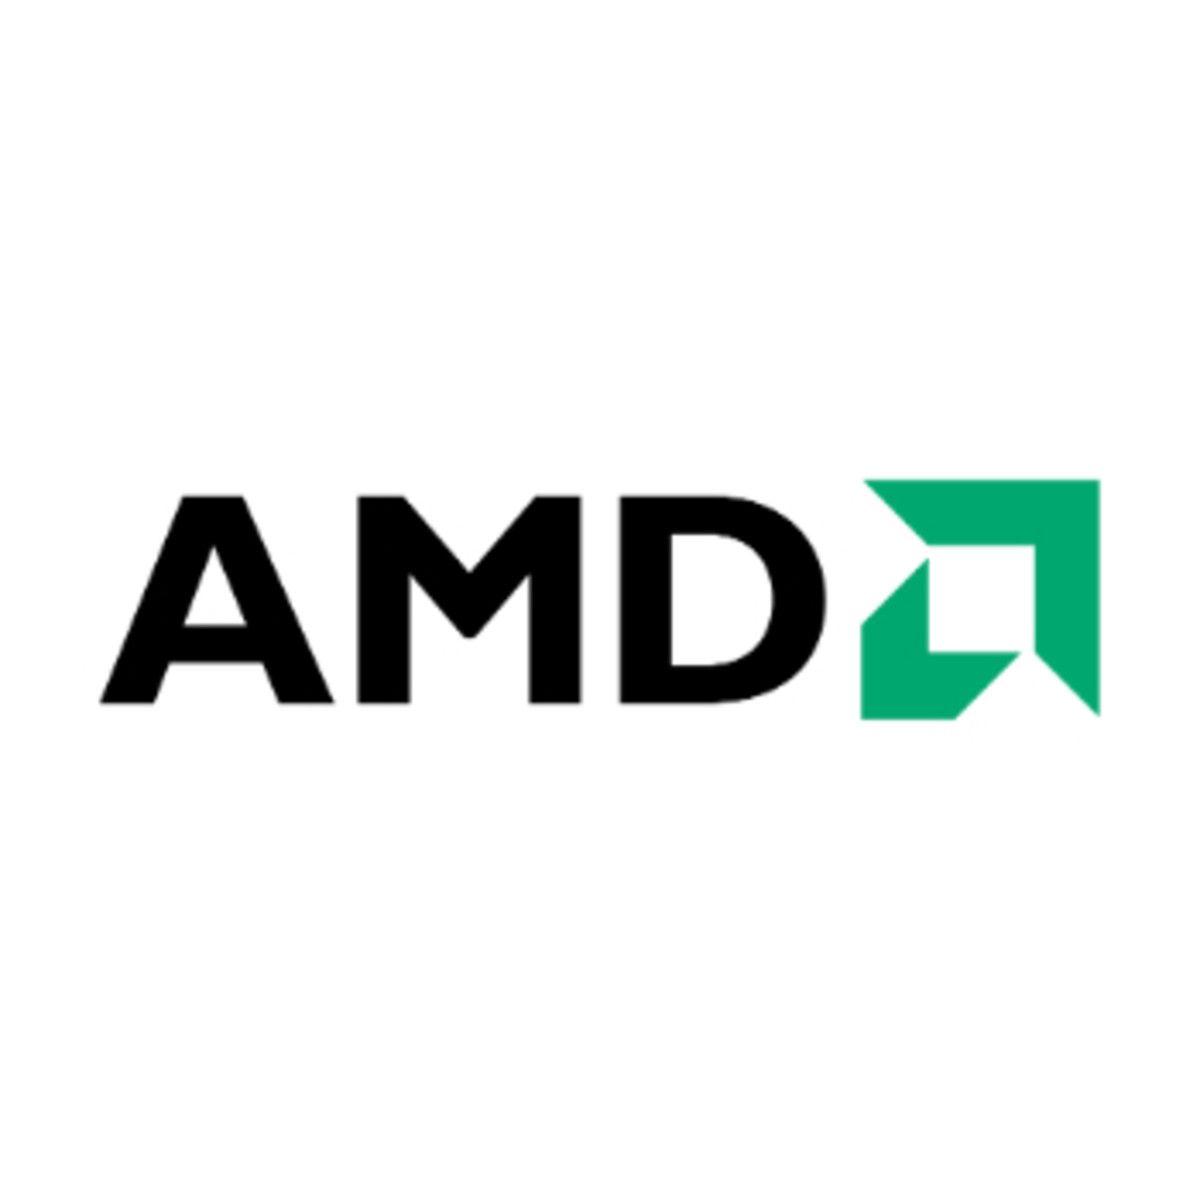 AMDA Logo - AMD acquires Nitero wireless VR IP